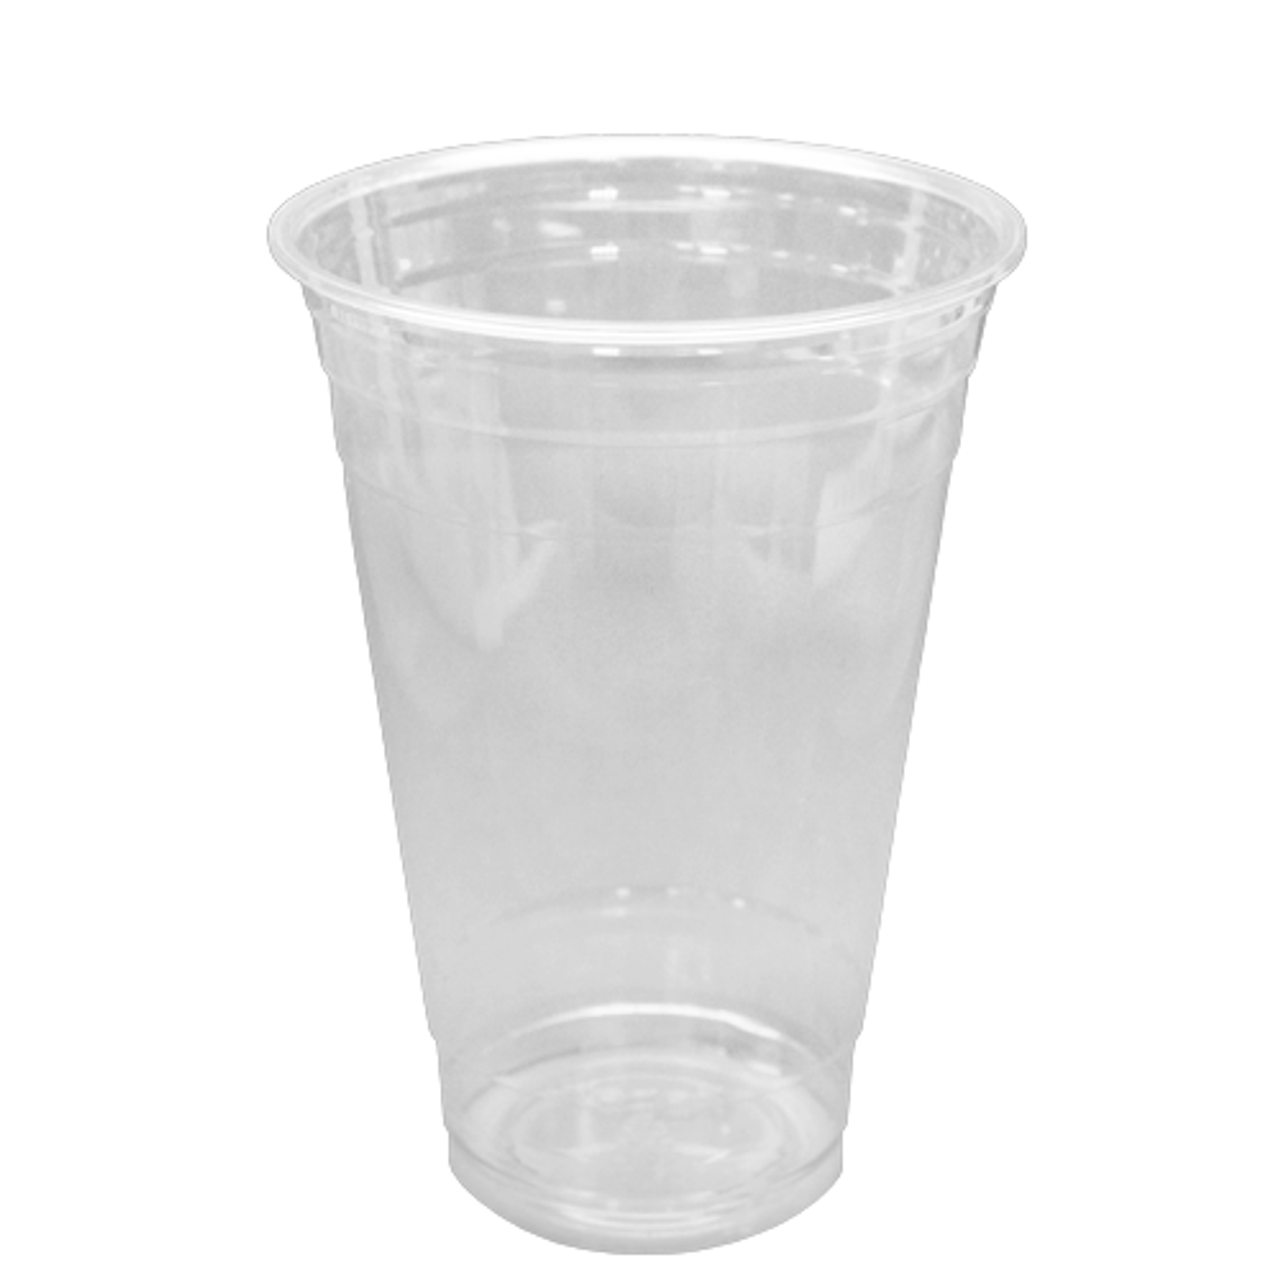 Plastic Cups - 16oz PET Cold Cups (98mm) - 1,000 ct